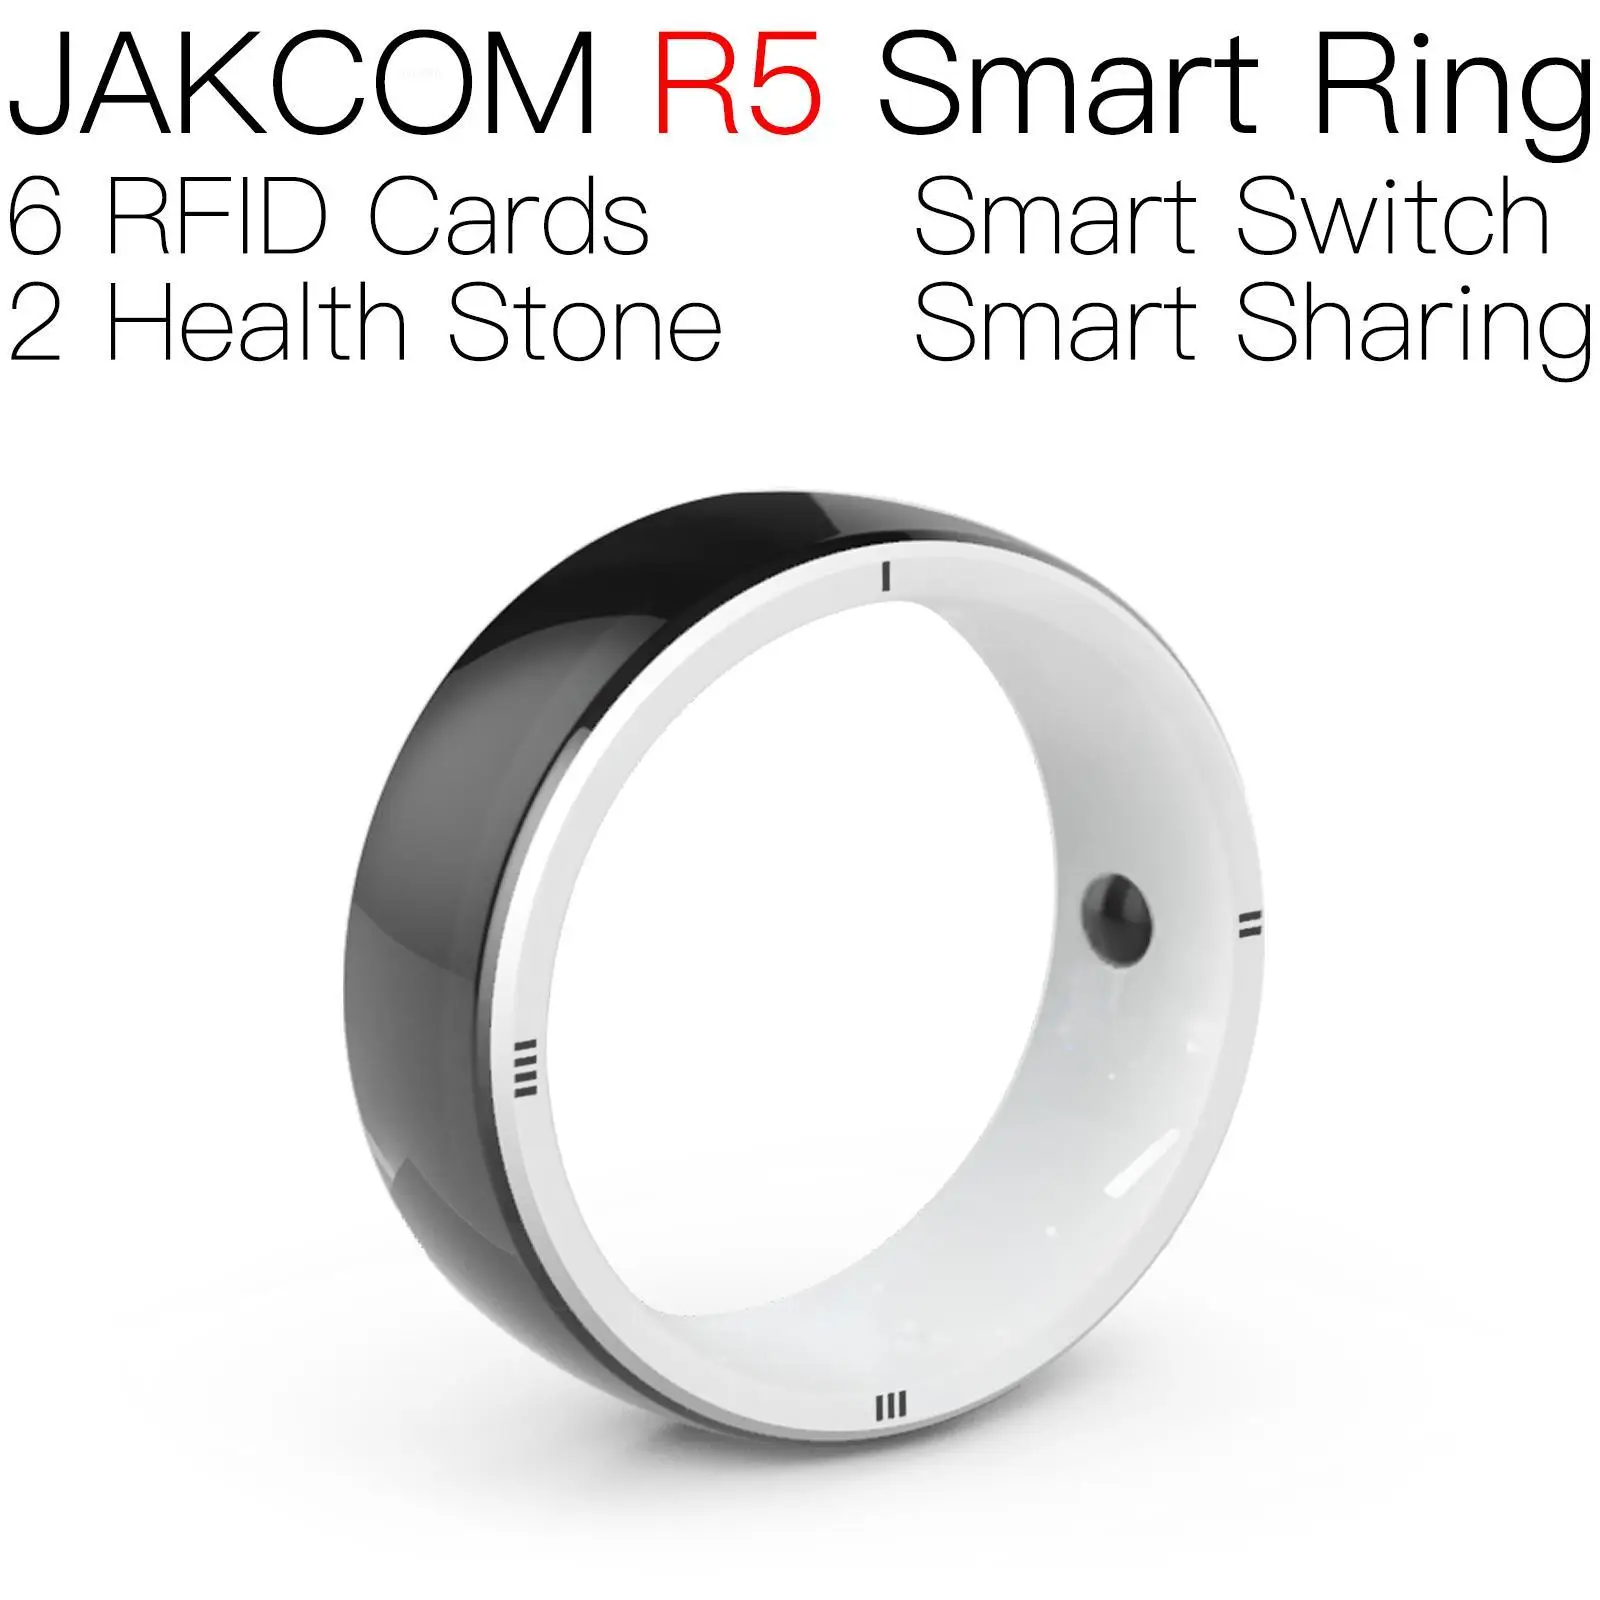 JAKCOM R5 Smart Ring Newer than oscal c80 nextool flagship t500 plus drill fitness band 115plus jordan 4 shoes kw88